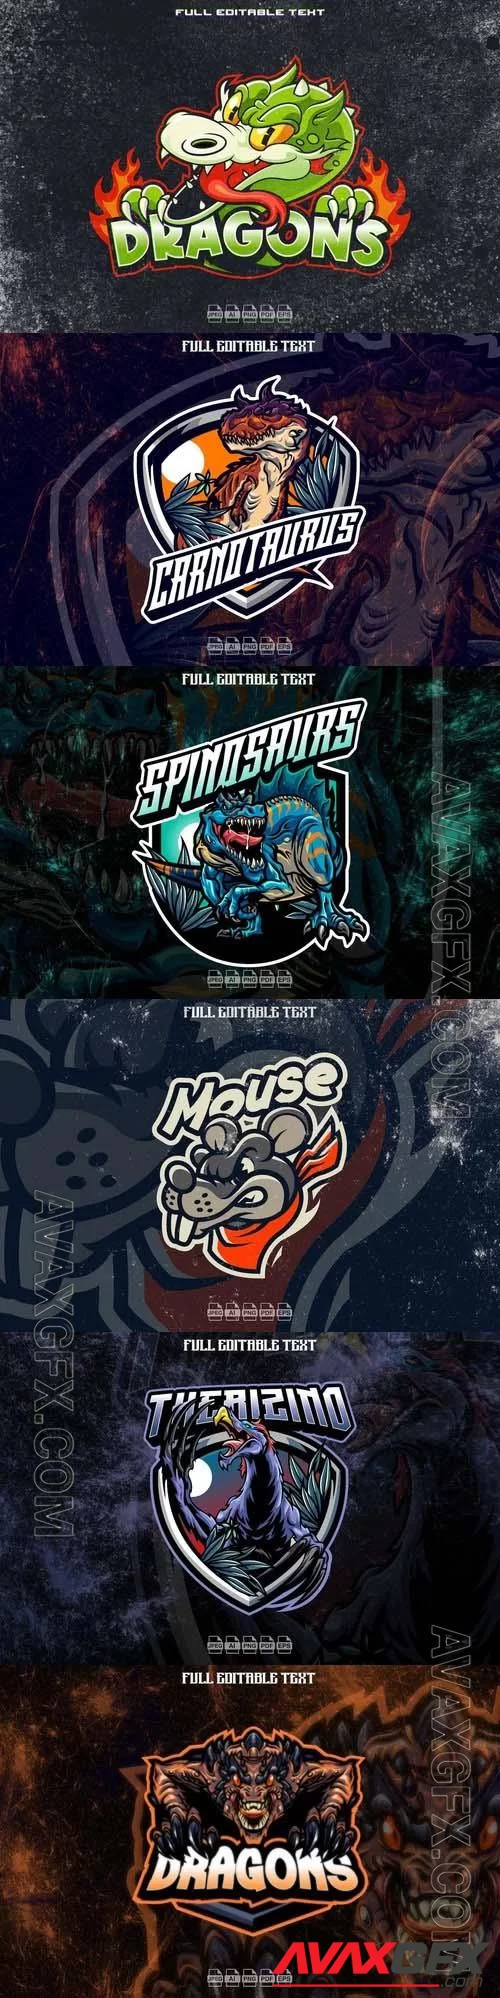 Mascot logo, cartoon character logo, retro logo vol 3